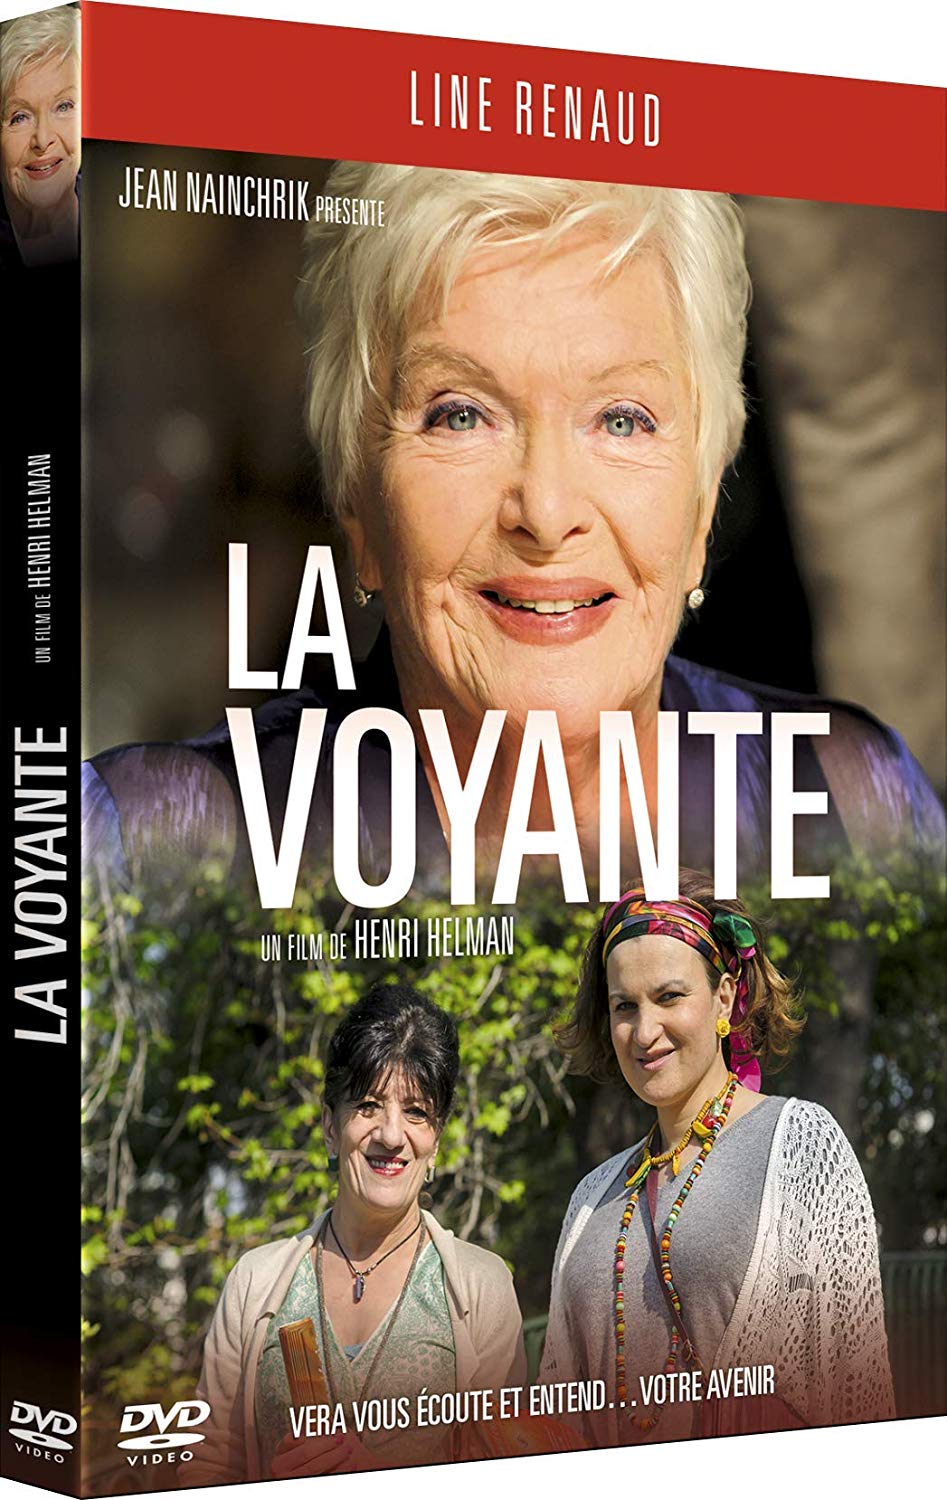 La Voyante [DVD]